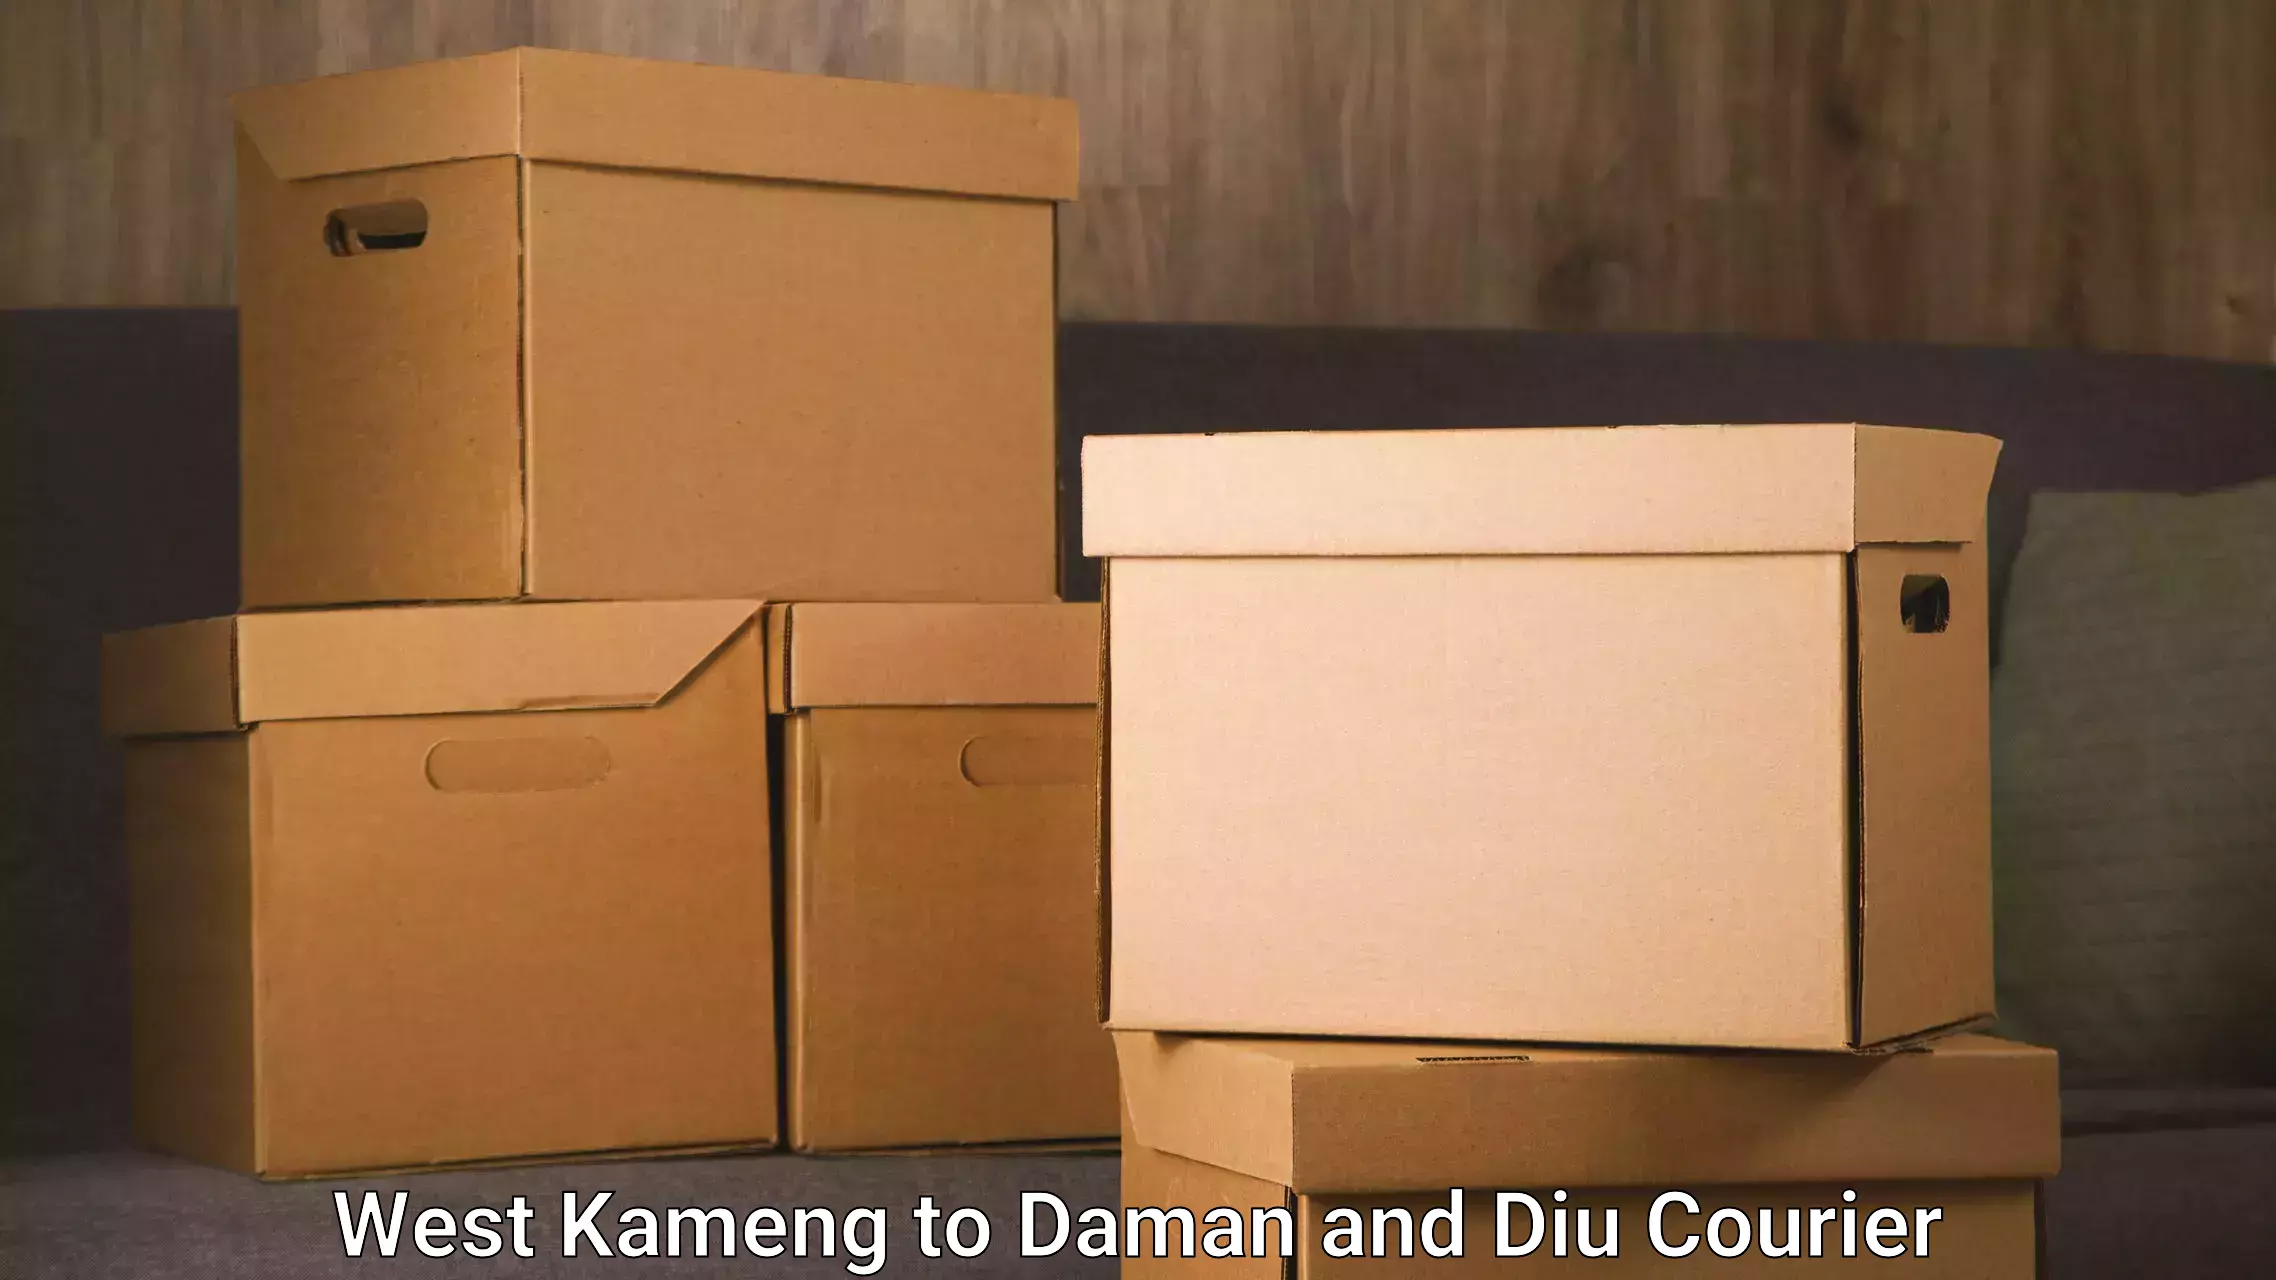 Global logistics network West Kameng to Diu